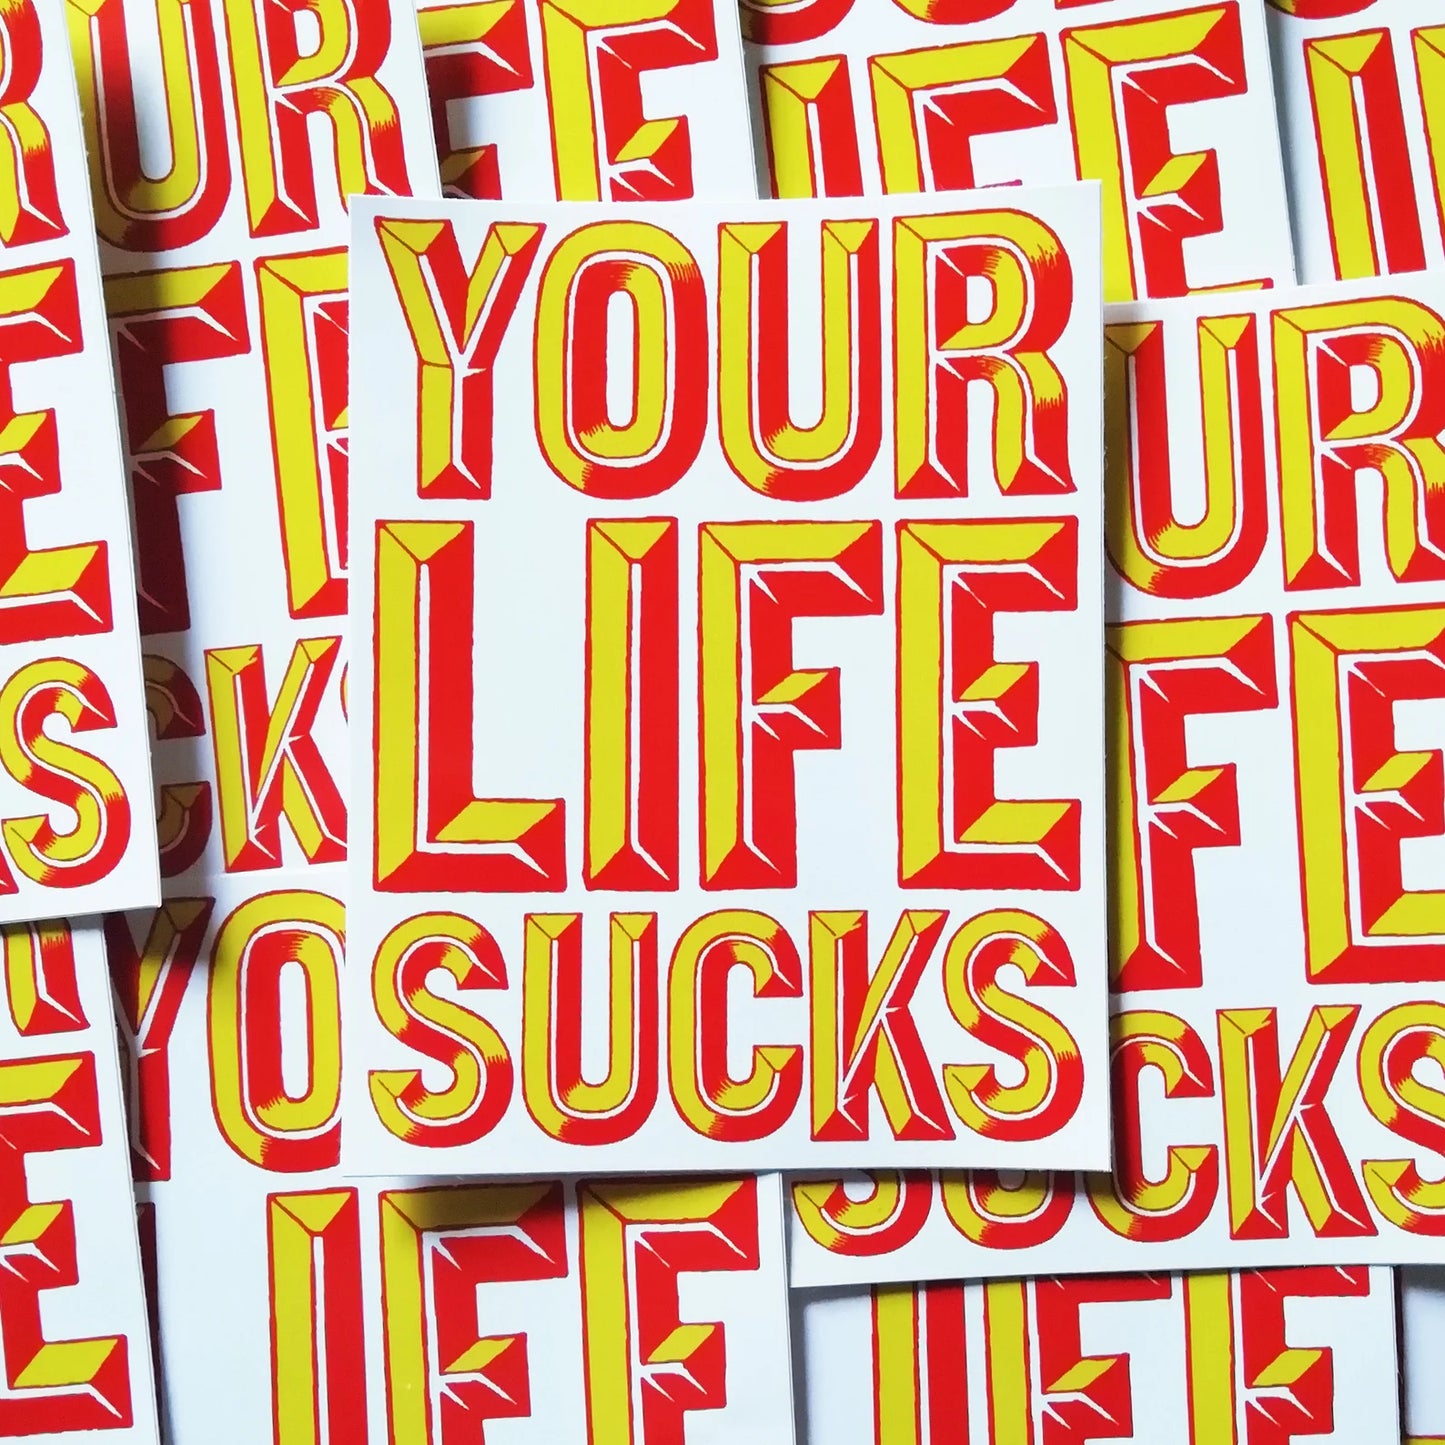 Your life sucks sticker